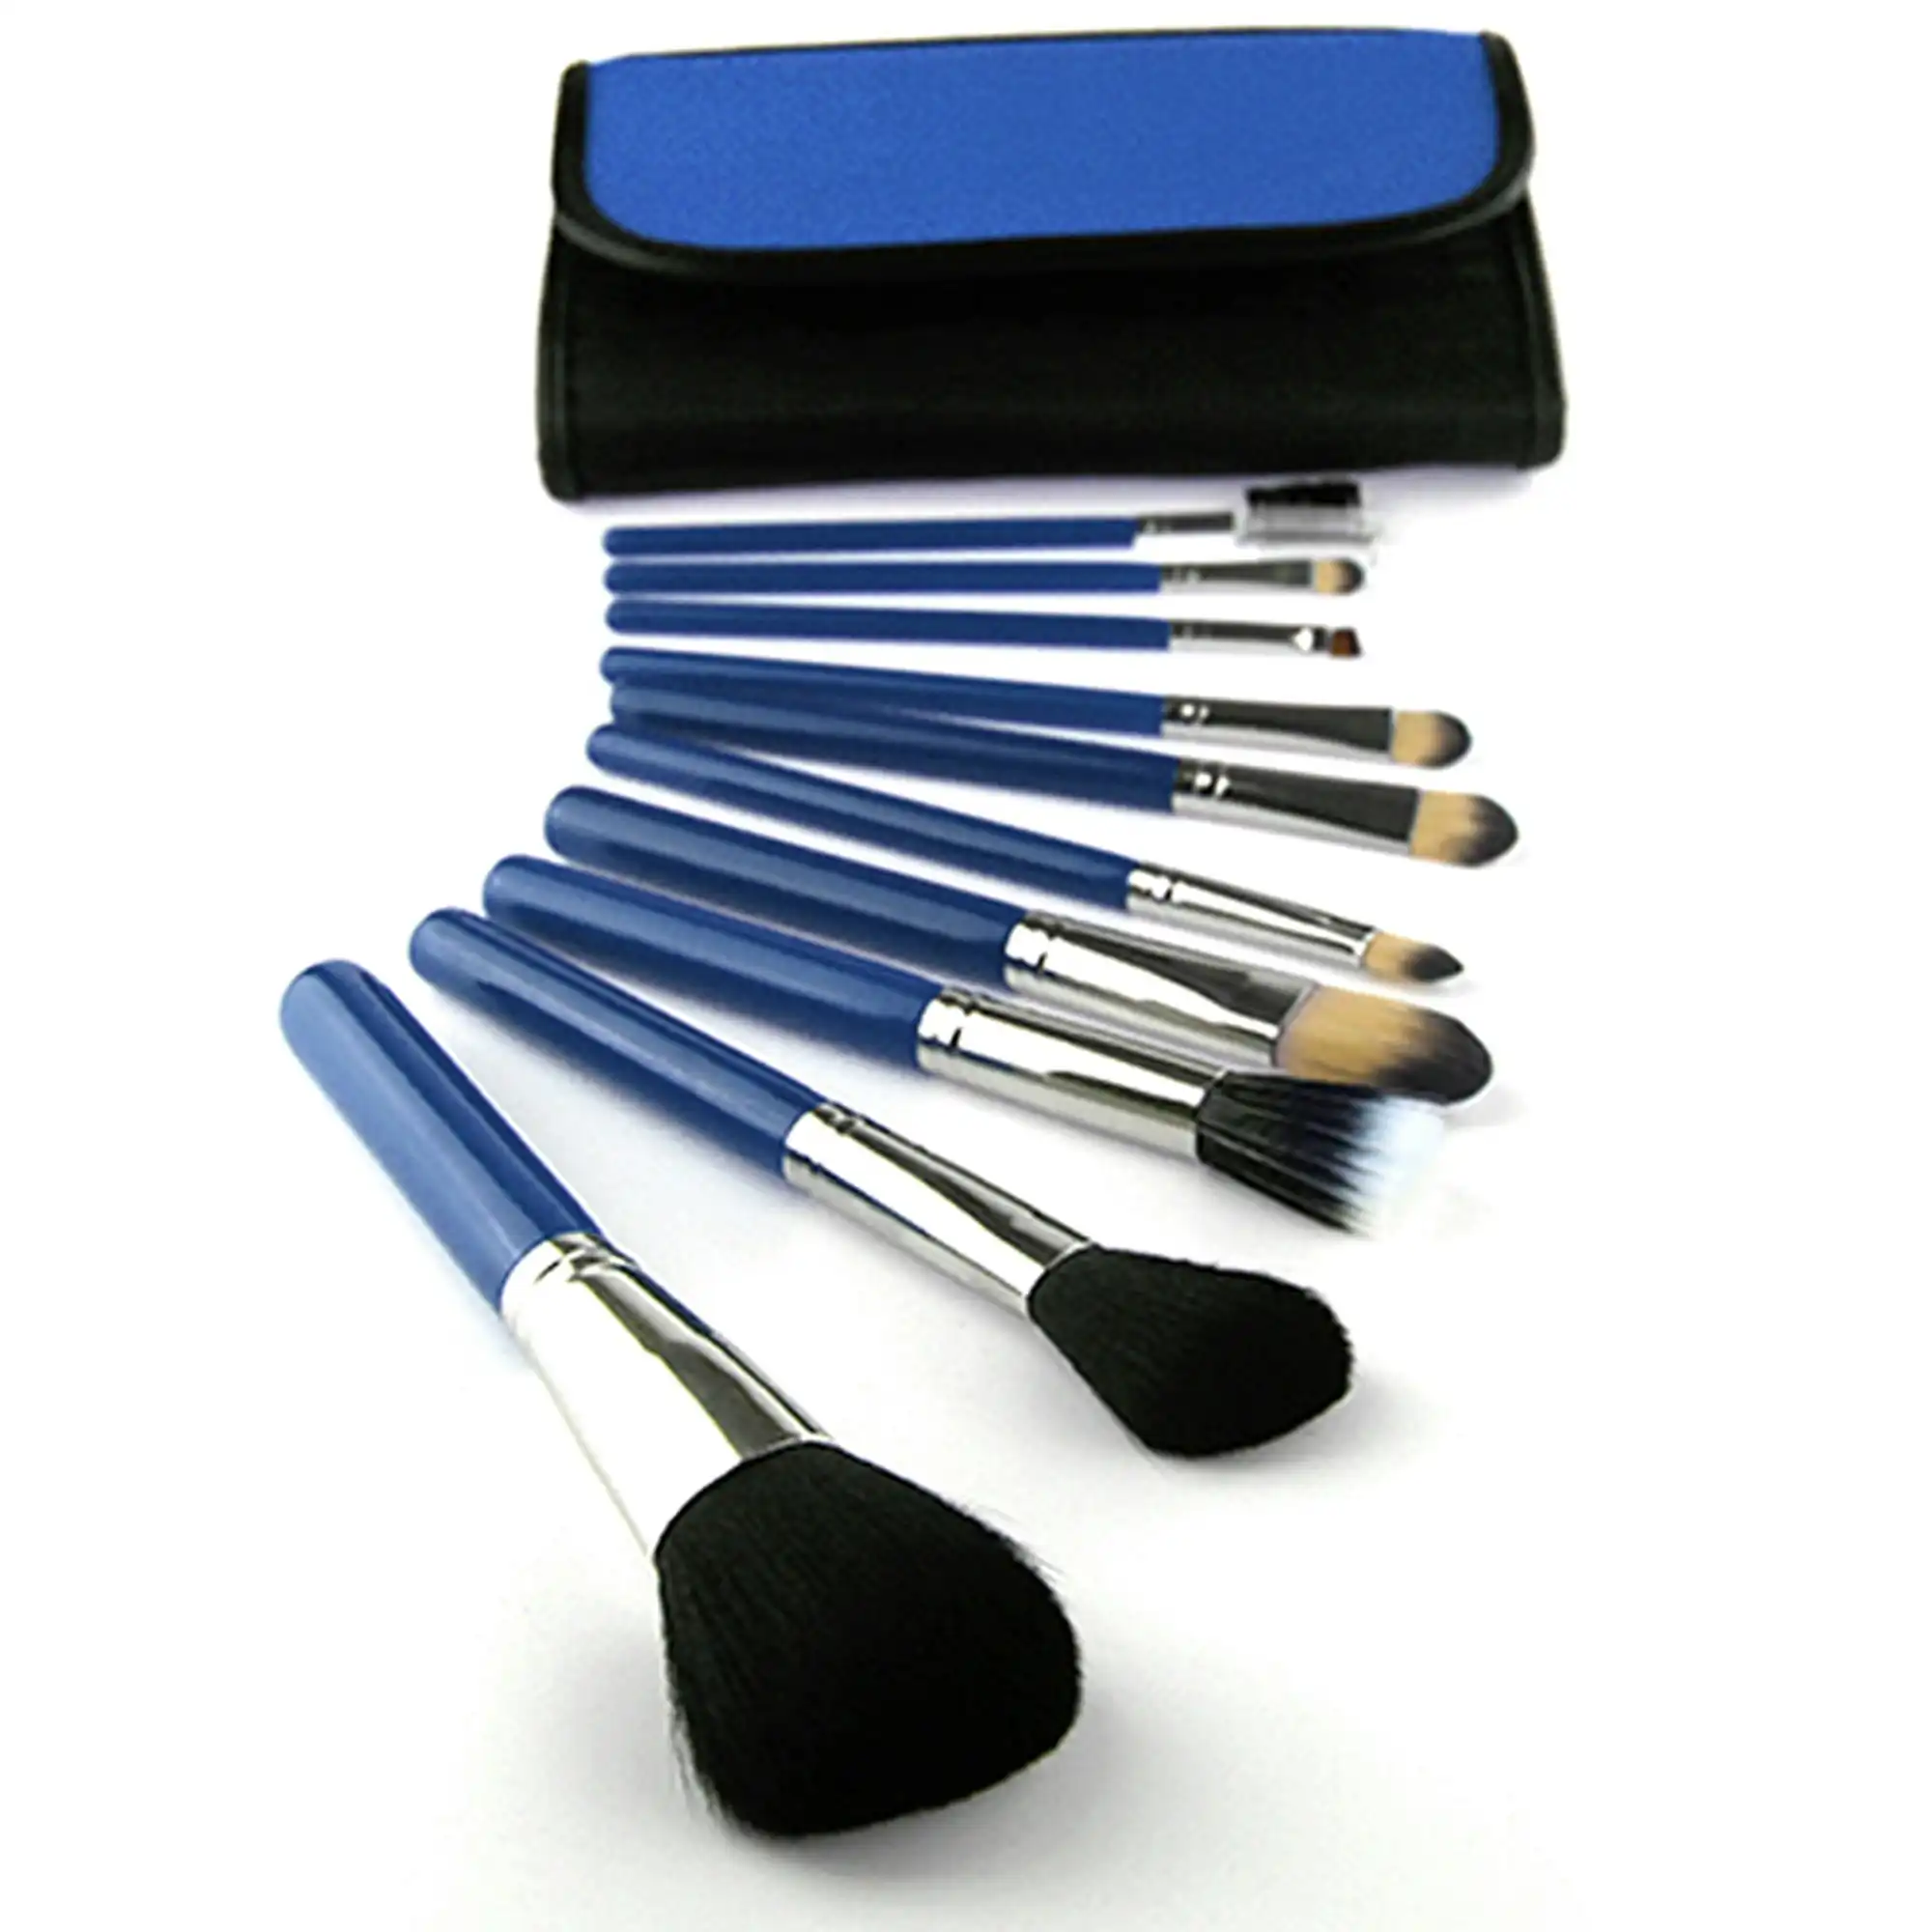 10 Piece Professional Makeup Brush Set Soft Bristle with Carry Case Blue